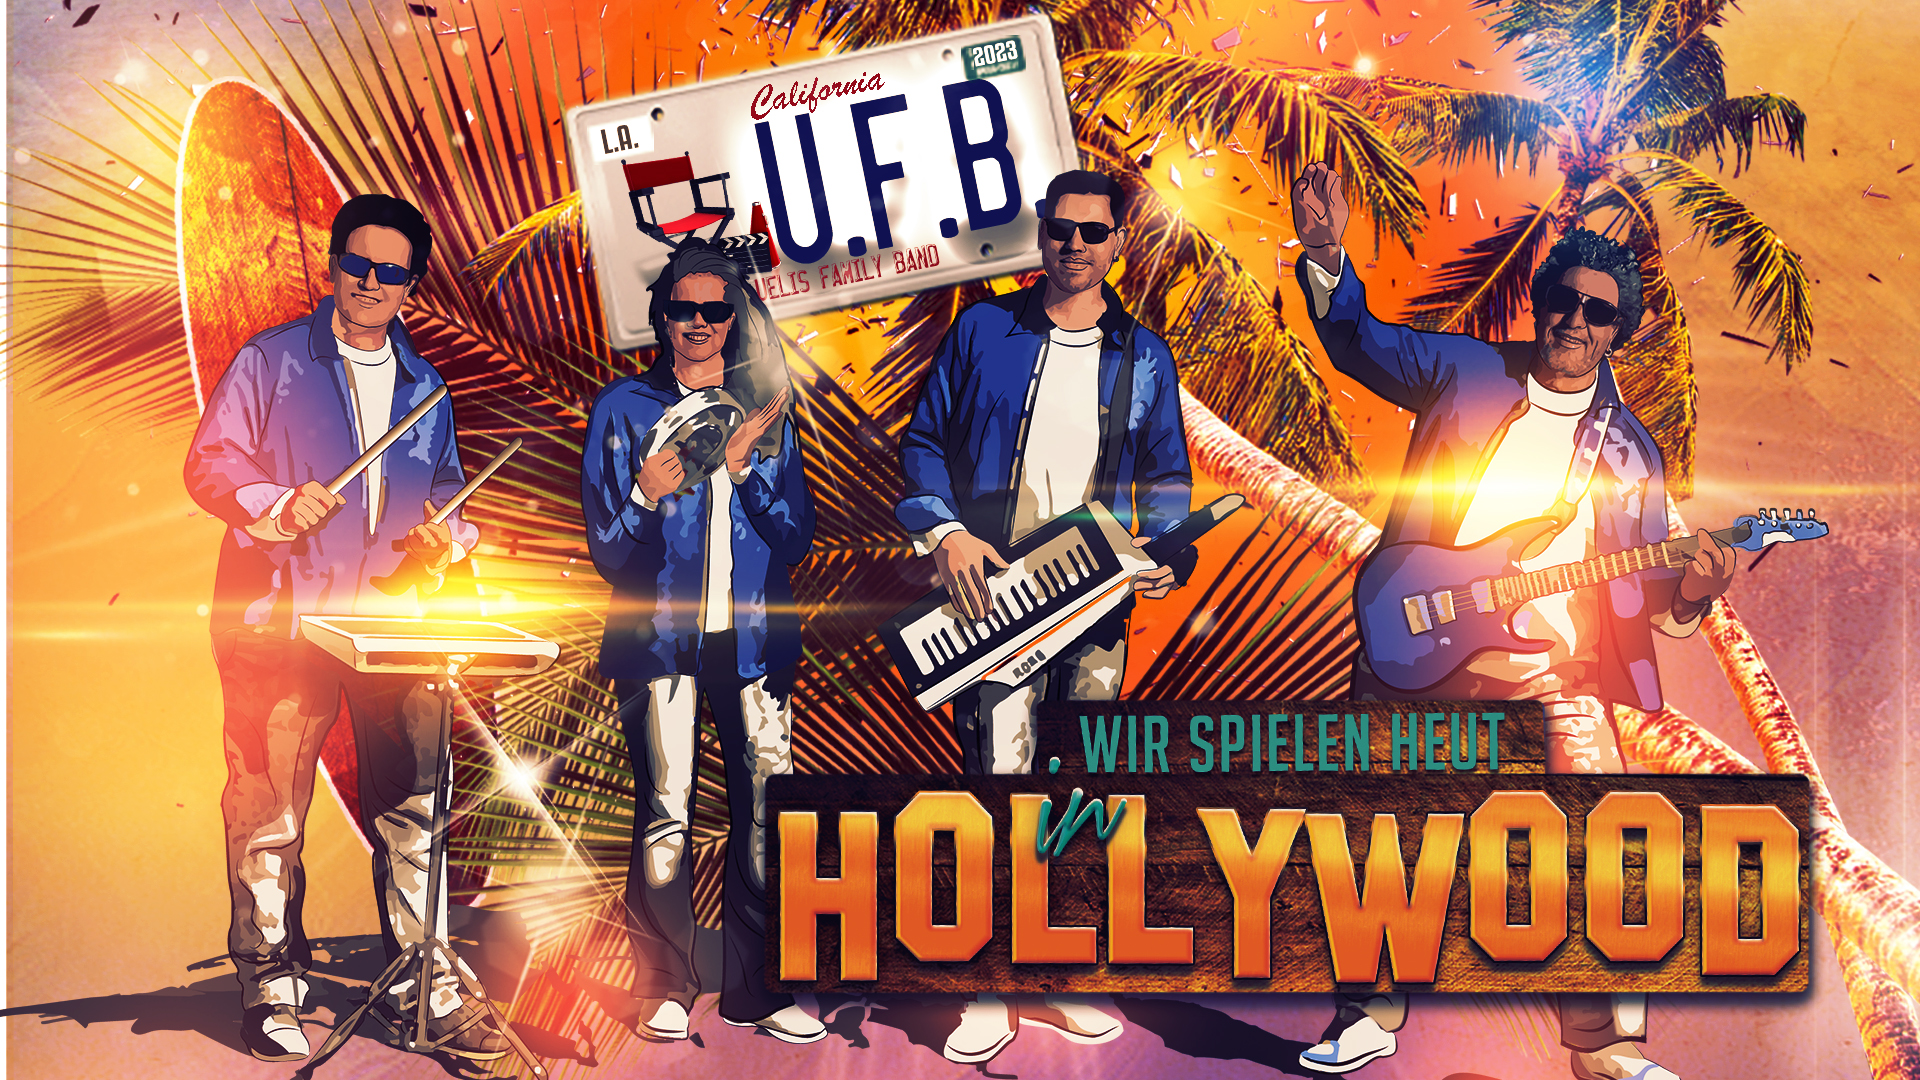 U.F.B. – UELIS FAMILY BAND * Wir spielen heut in Hollywood (Download-Track)